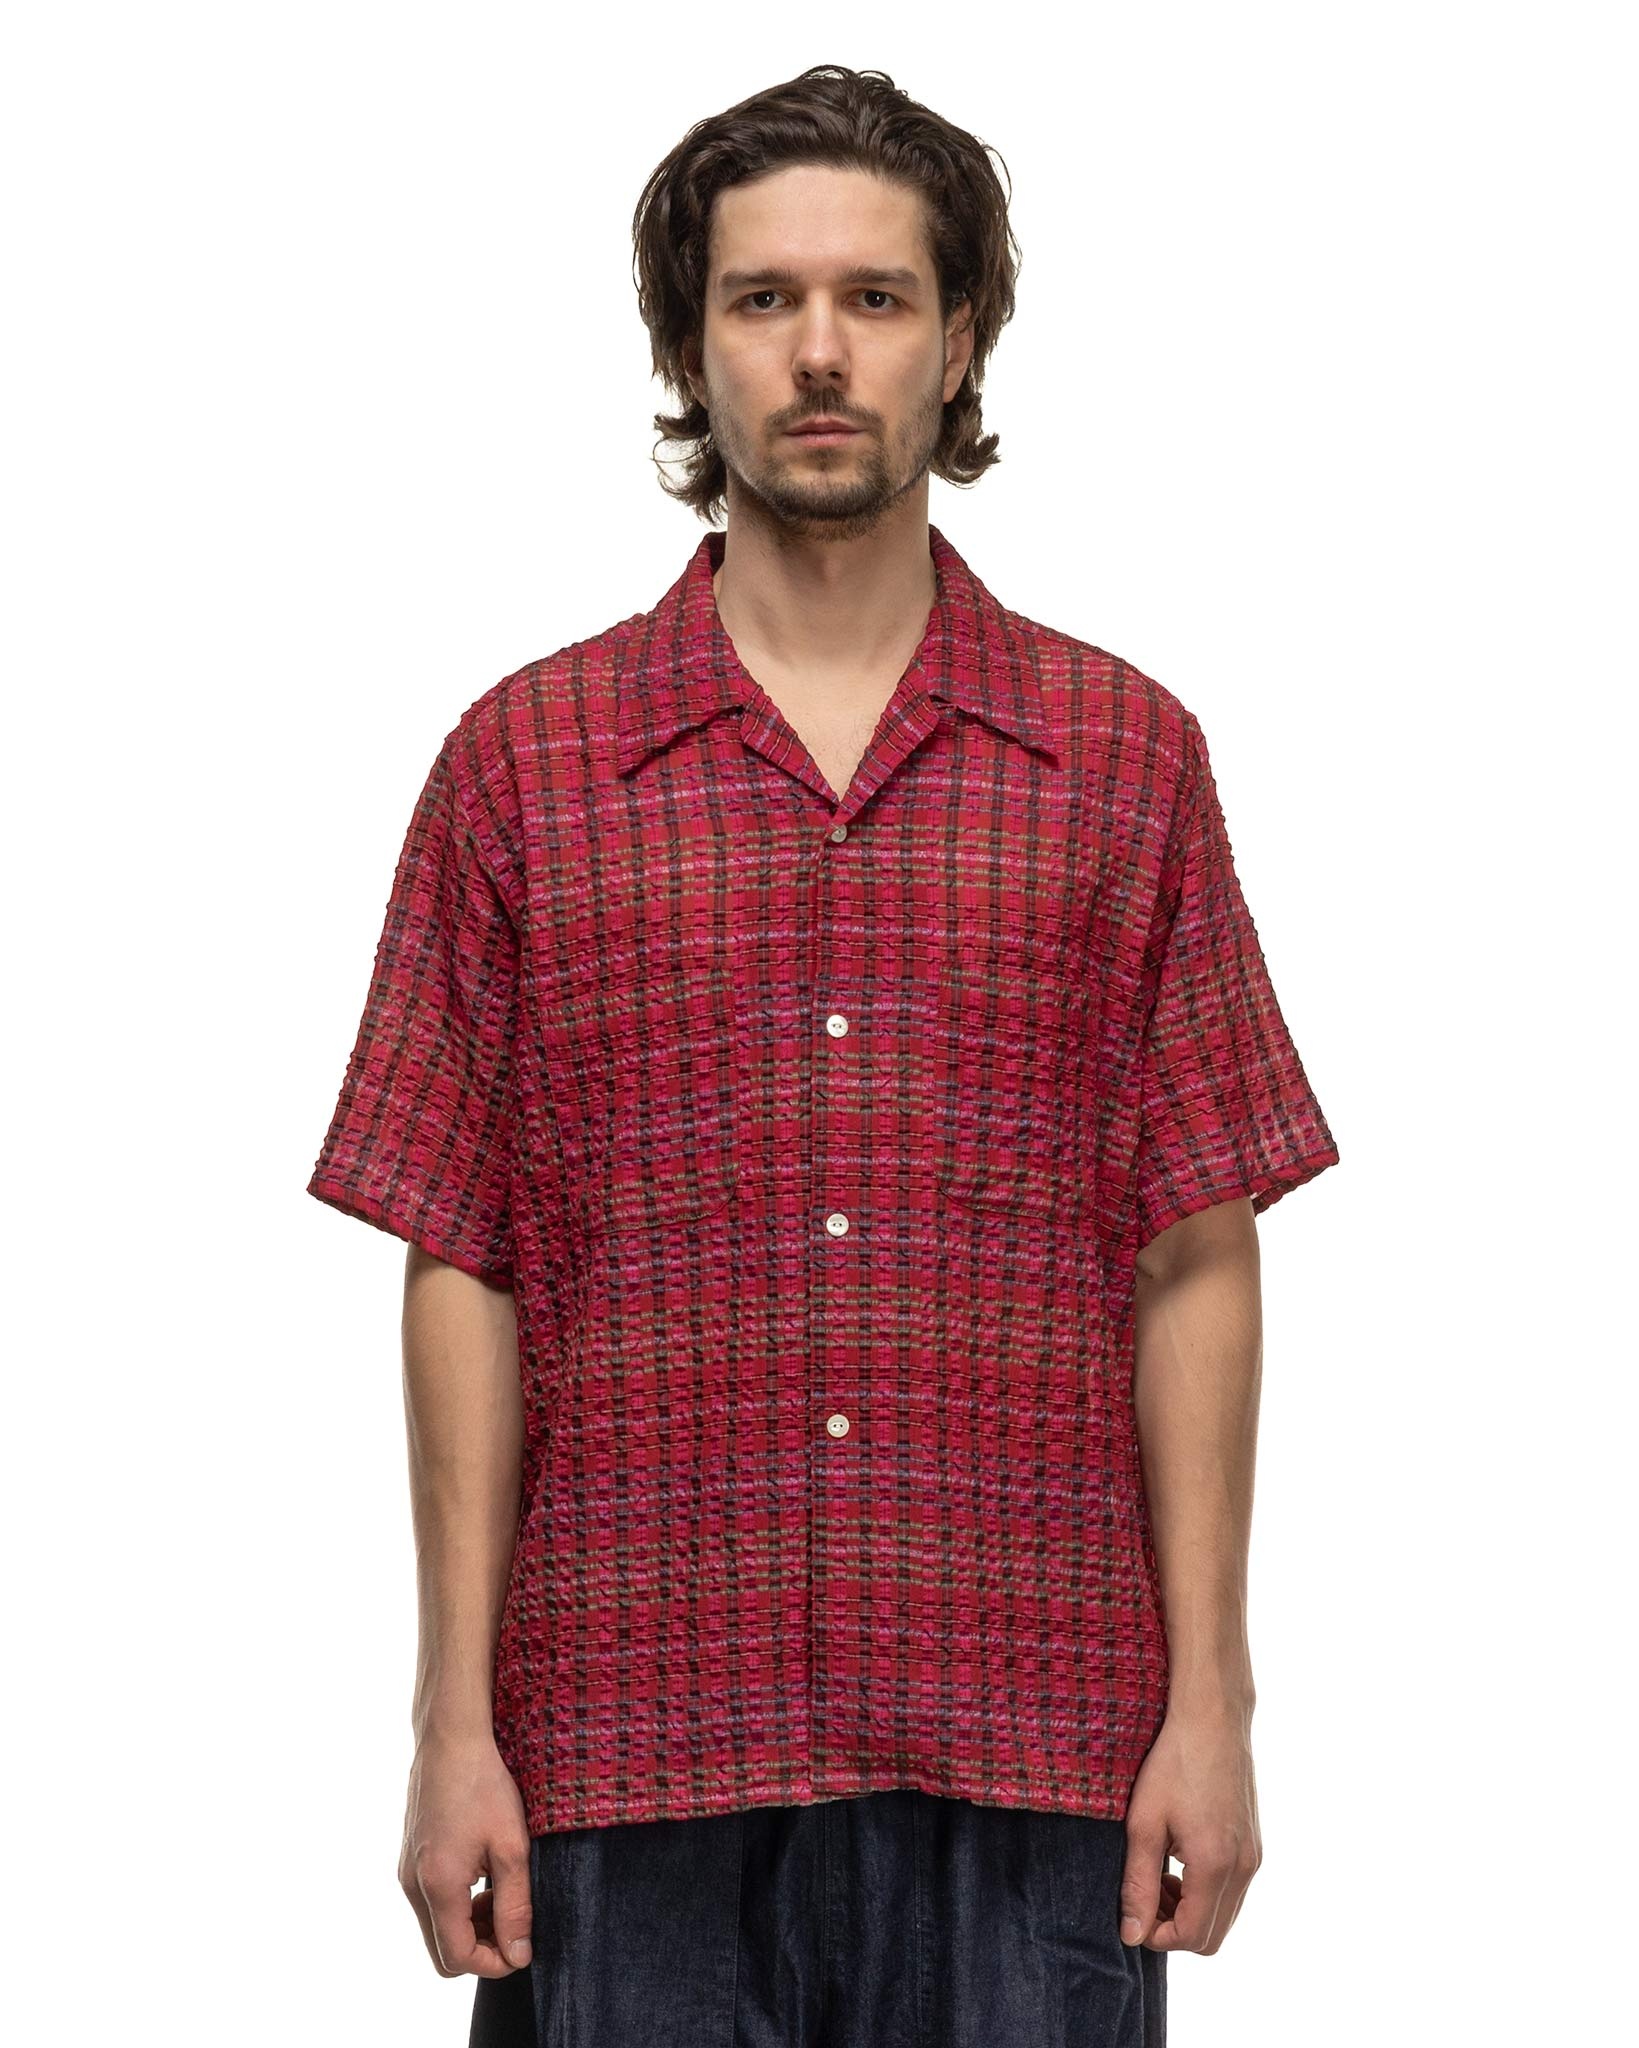 S/S One-Up Shirt - PE/R Chiffon Sucker Plaid Red - 4